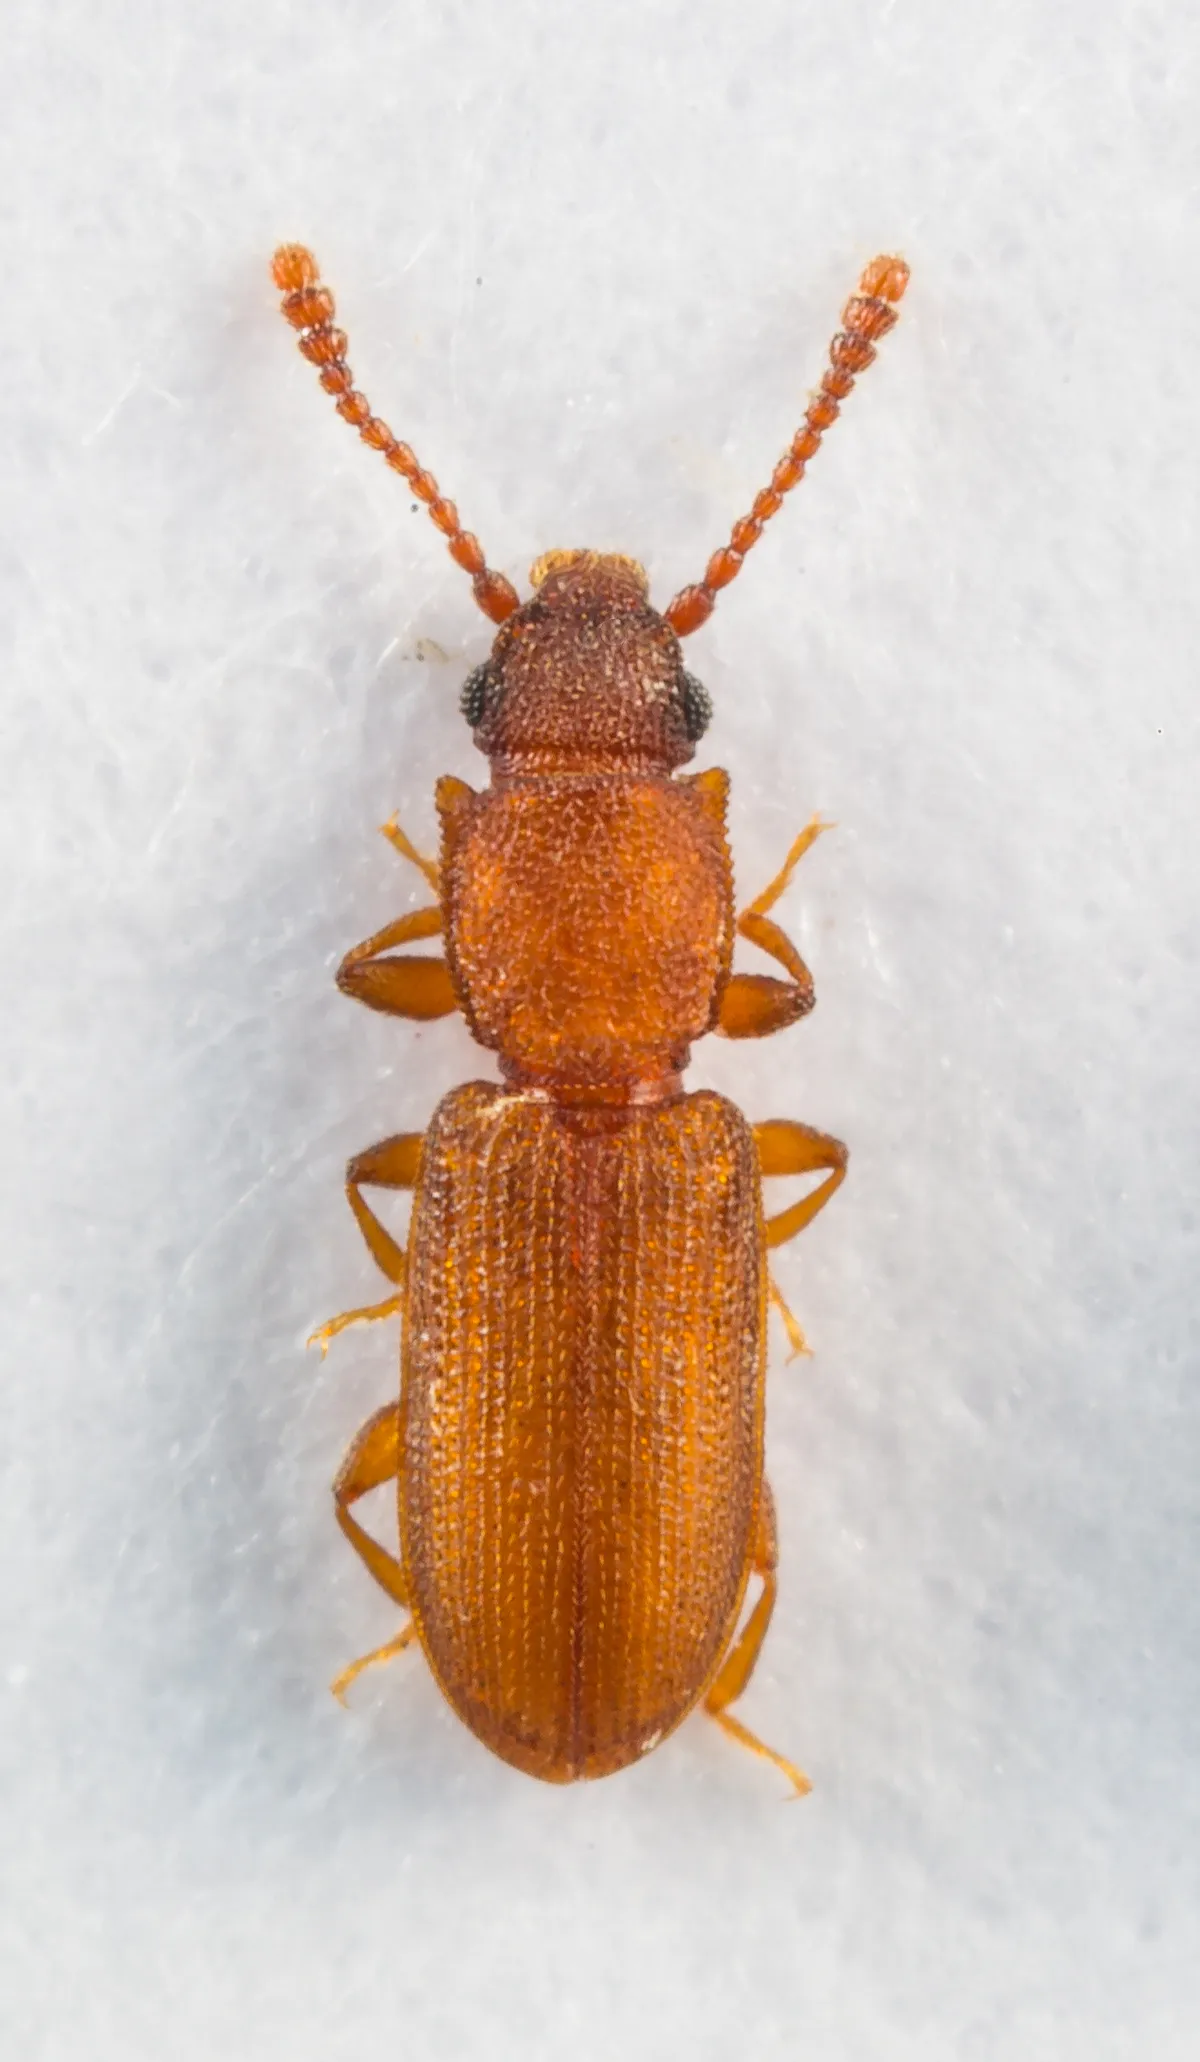 Silvanus recticollis, the newly discovered bark beetle at Wicken Fen. © Allan Drewitt